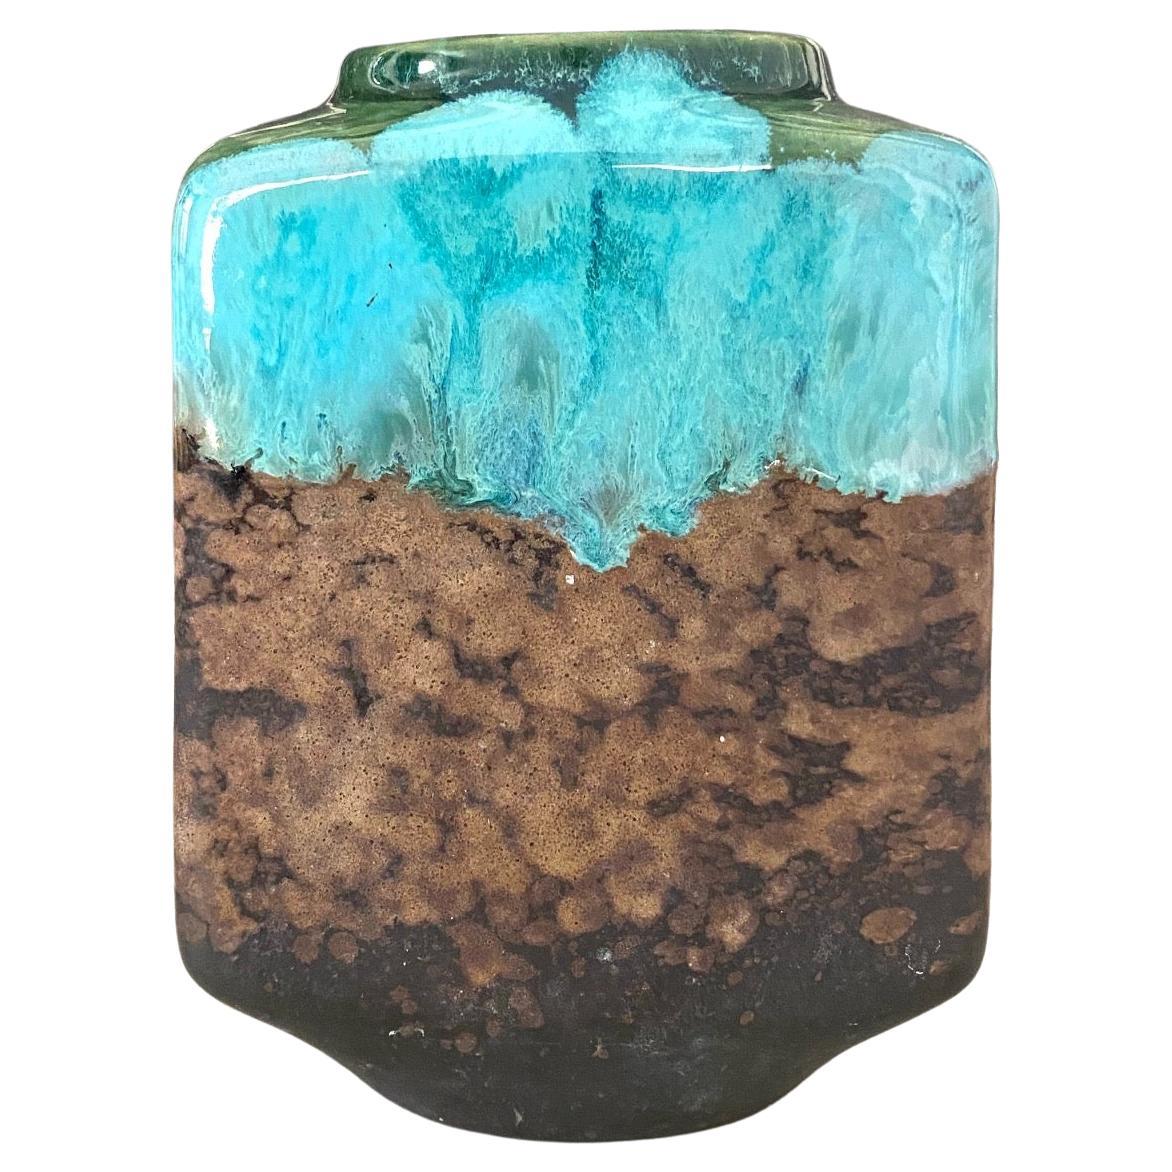 Mid-Century Modern Raku Pottery Vase with Turquoise Drip Glaze, c. 1960's